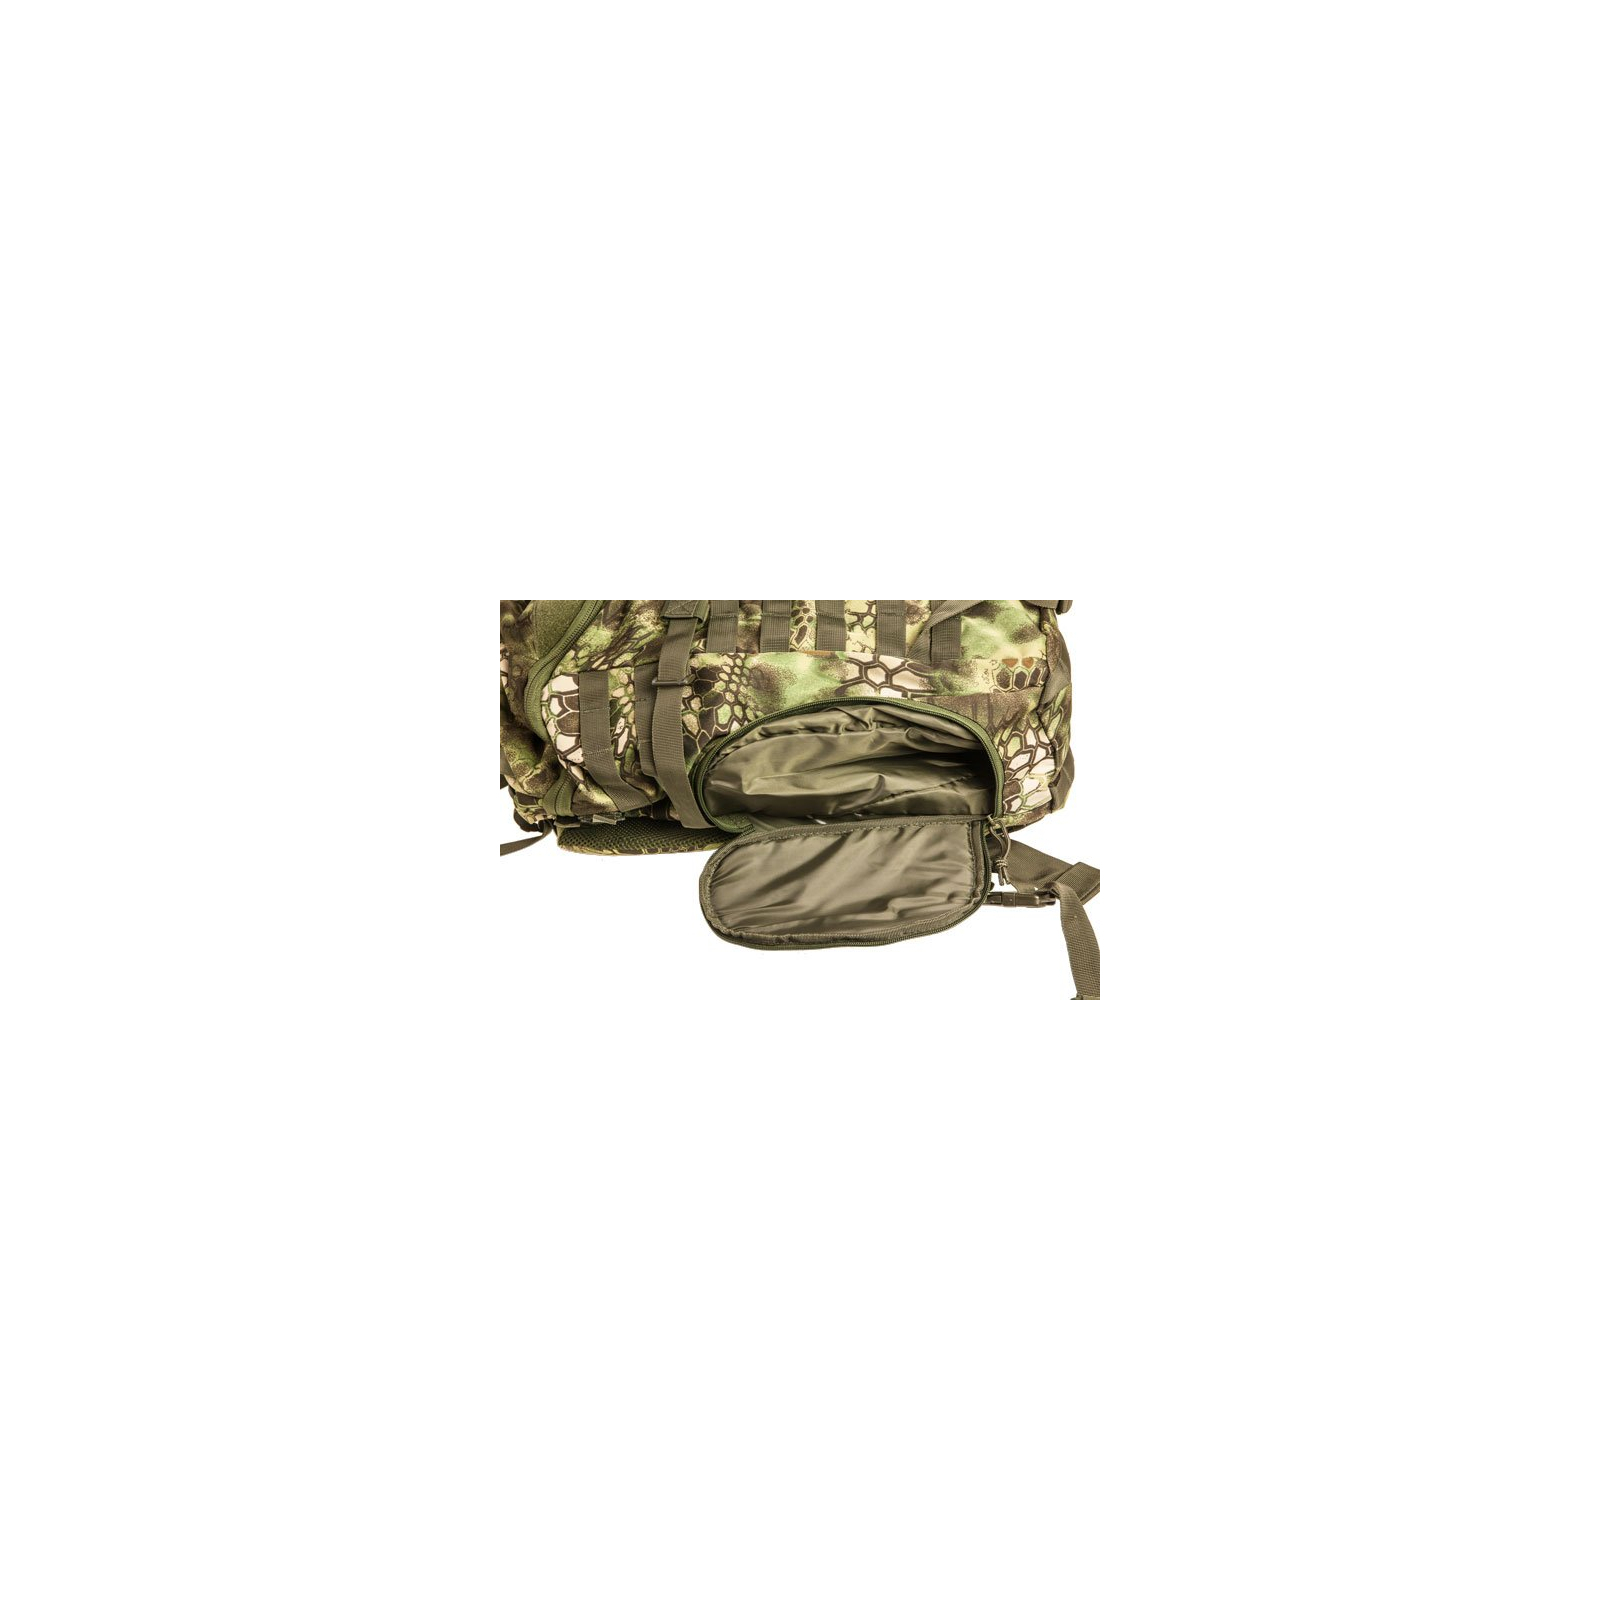 Рюкзак туристичний Skif Tac тактический штурмовой 35 литров kryptek green (GB0131-KGR) зображення 5